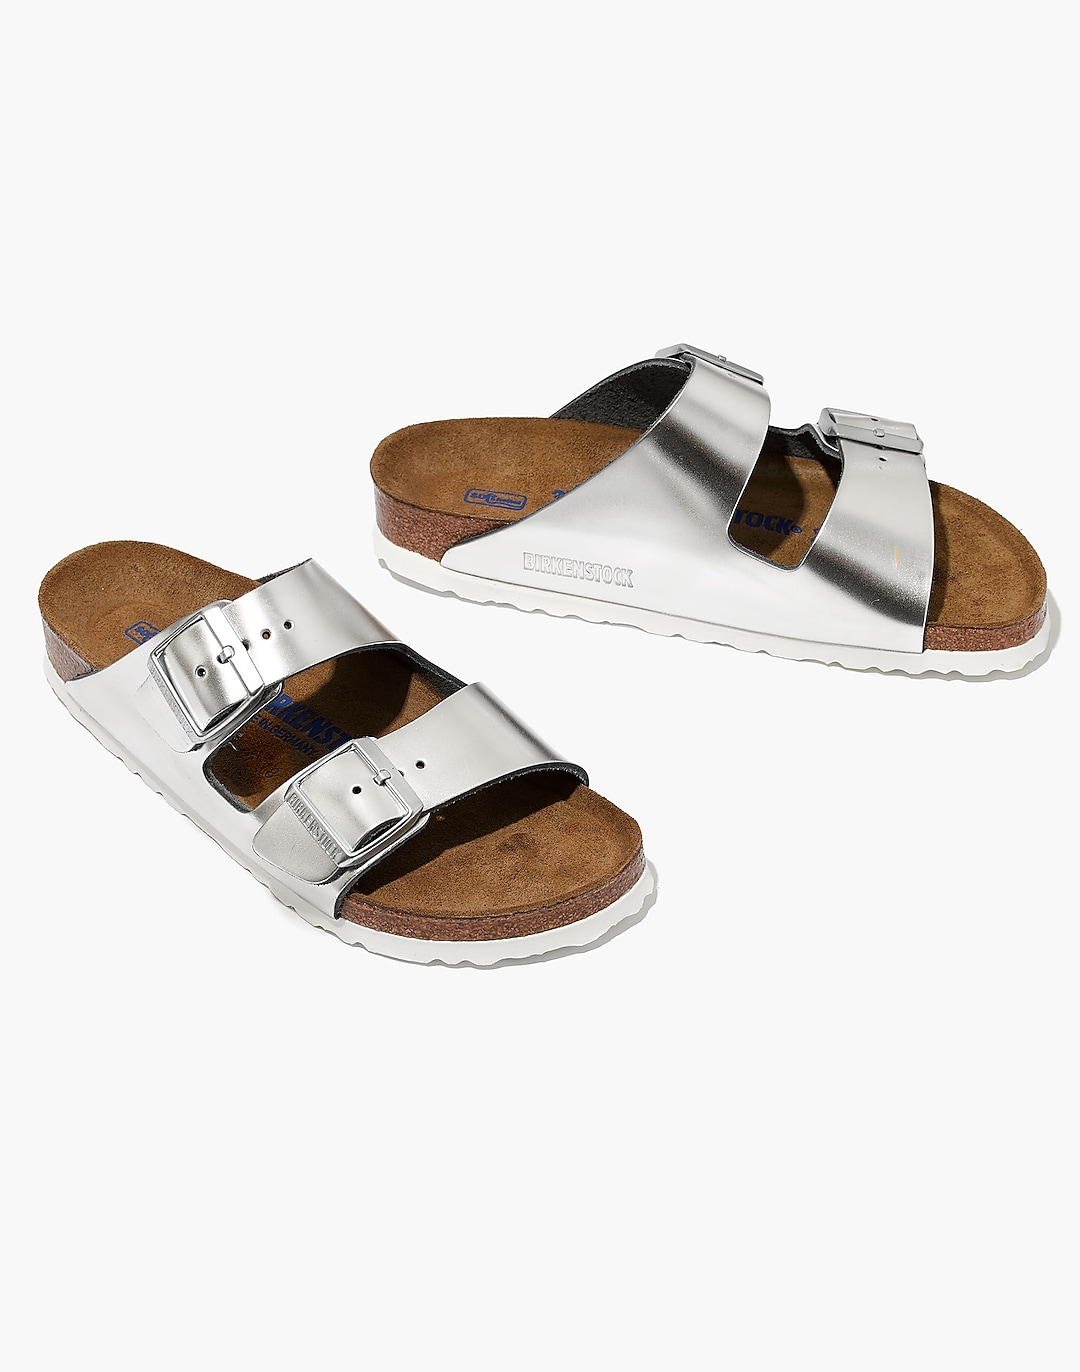 Birkenstock® Arizona Sandals in Leather | Madewell